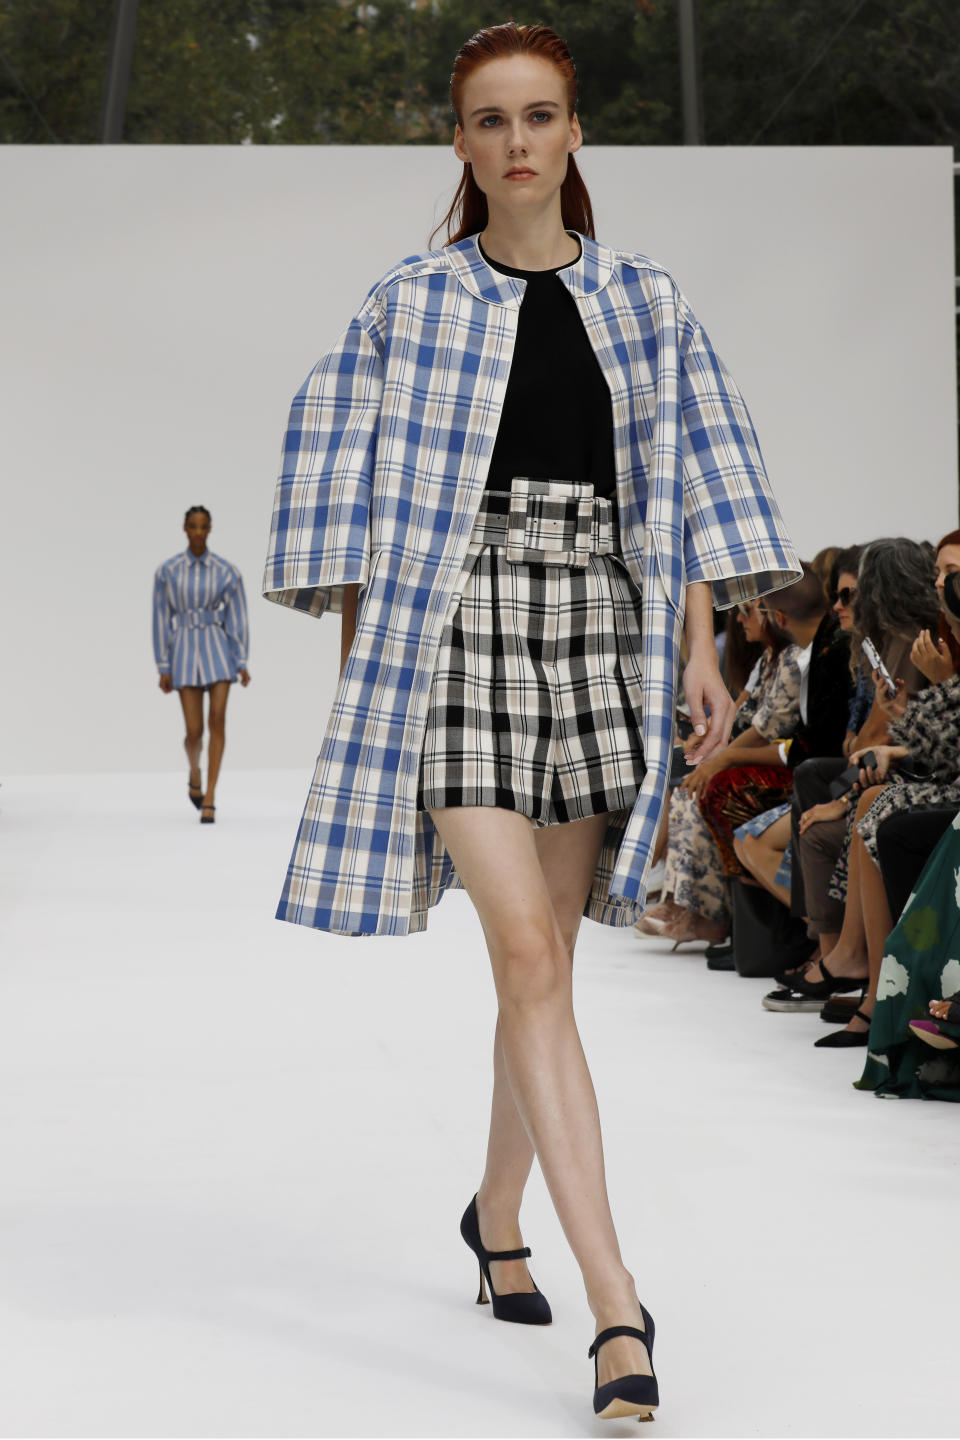 The Carolina Herrera collection is modeled during Fashion Week, in New York, Monday, Sept. 9, 2019. (AP Photo/Richard Drew)